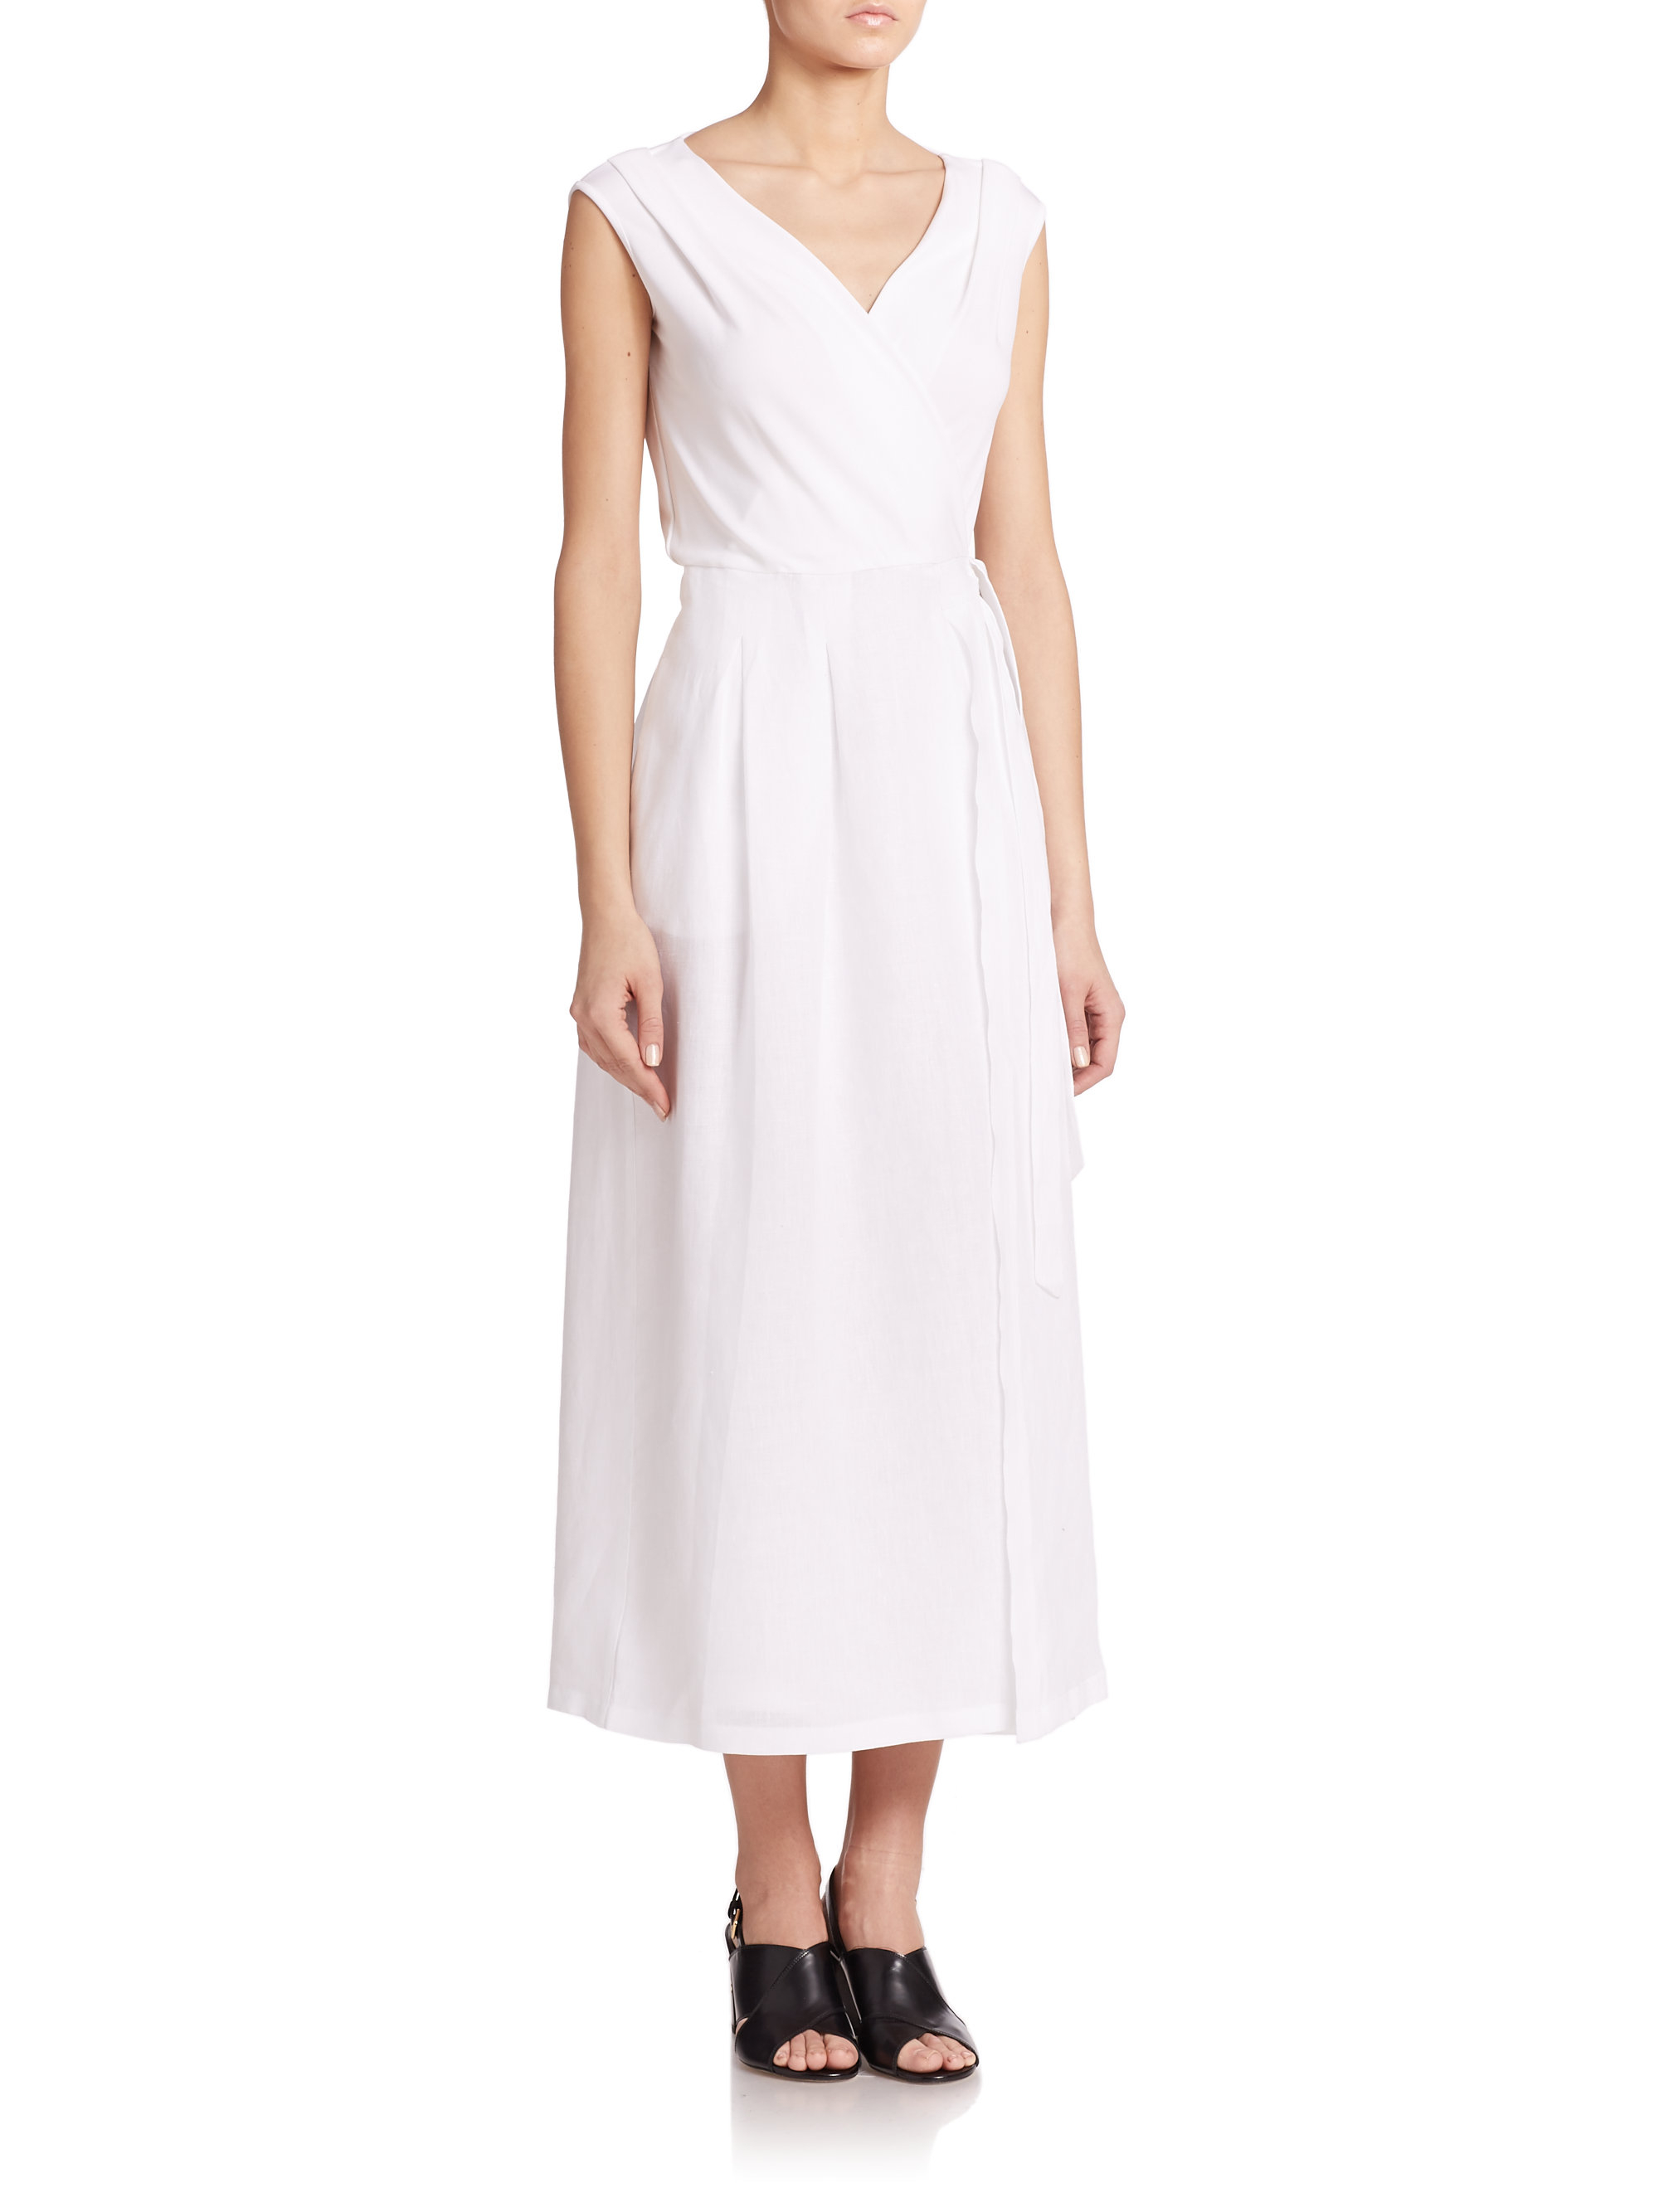 Lyst - Max Mara Corsaro Wrap Dress in White